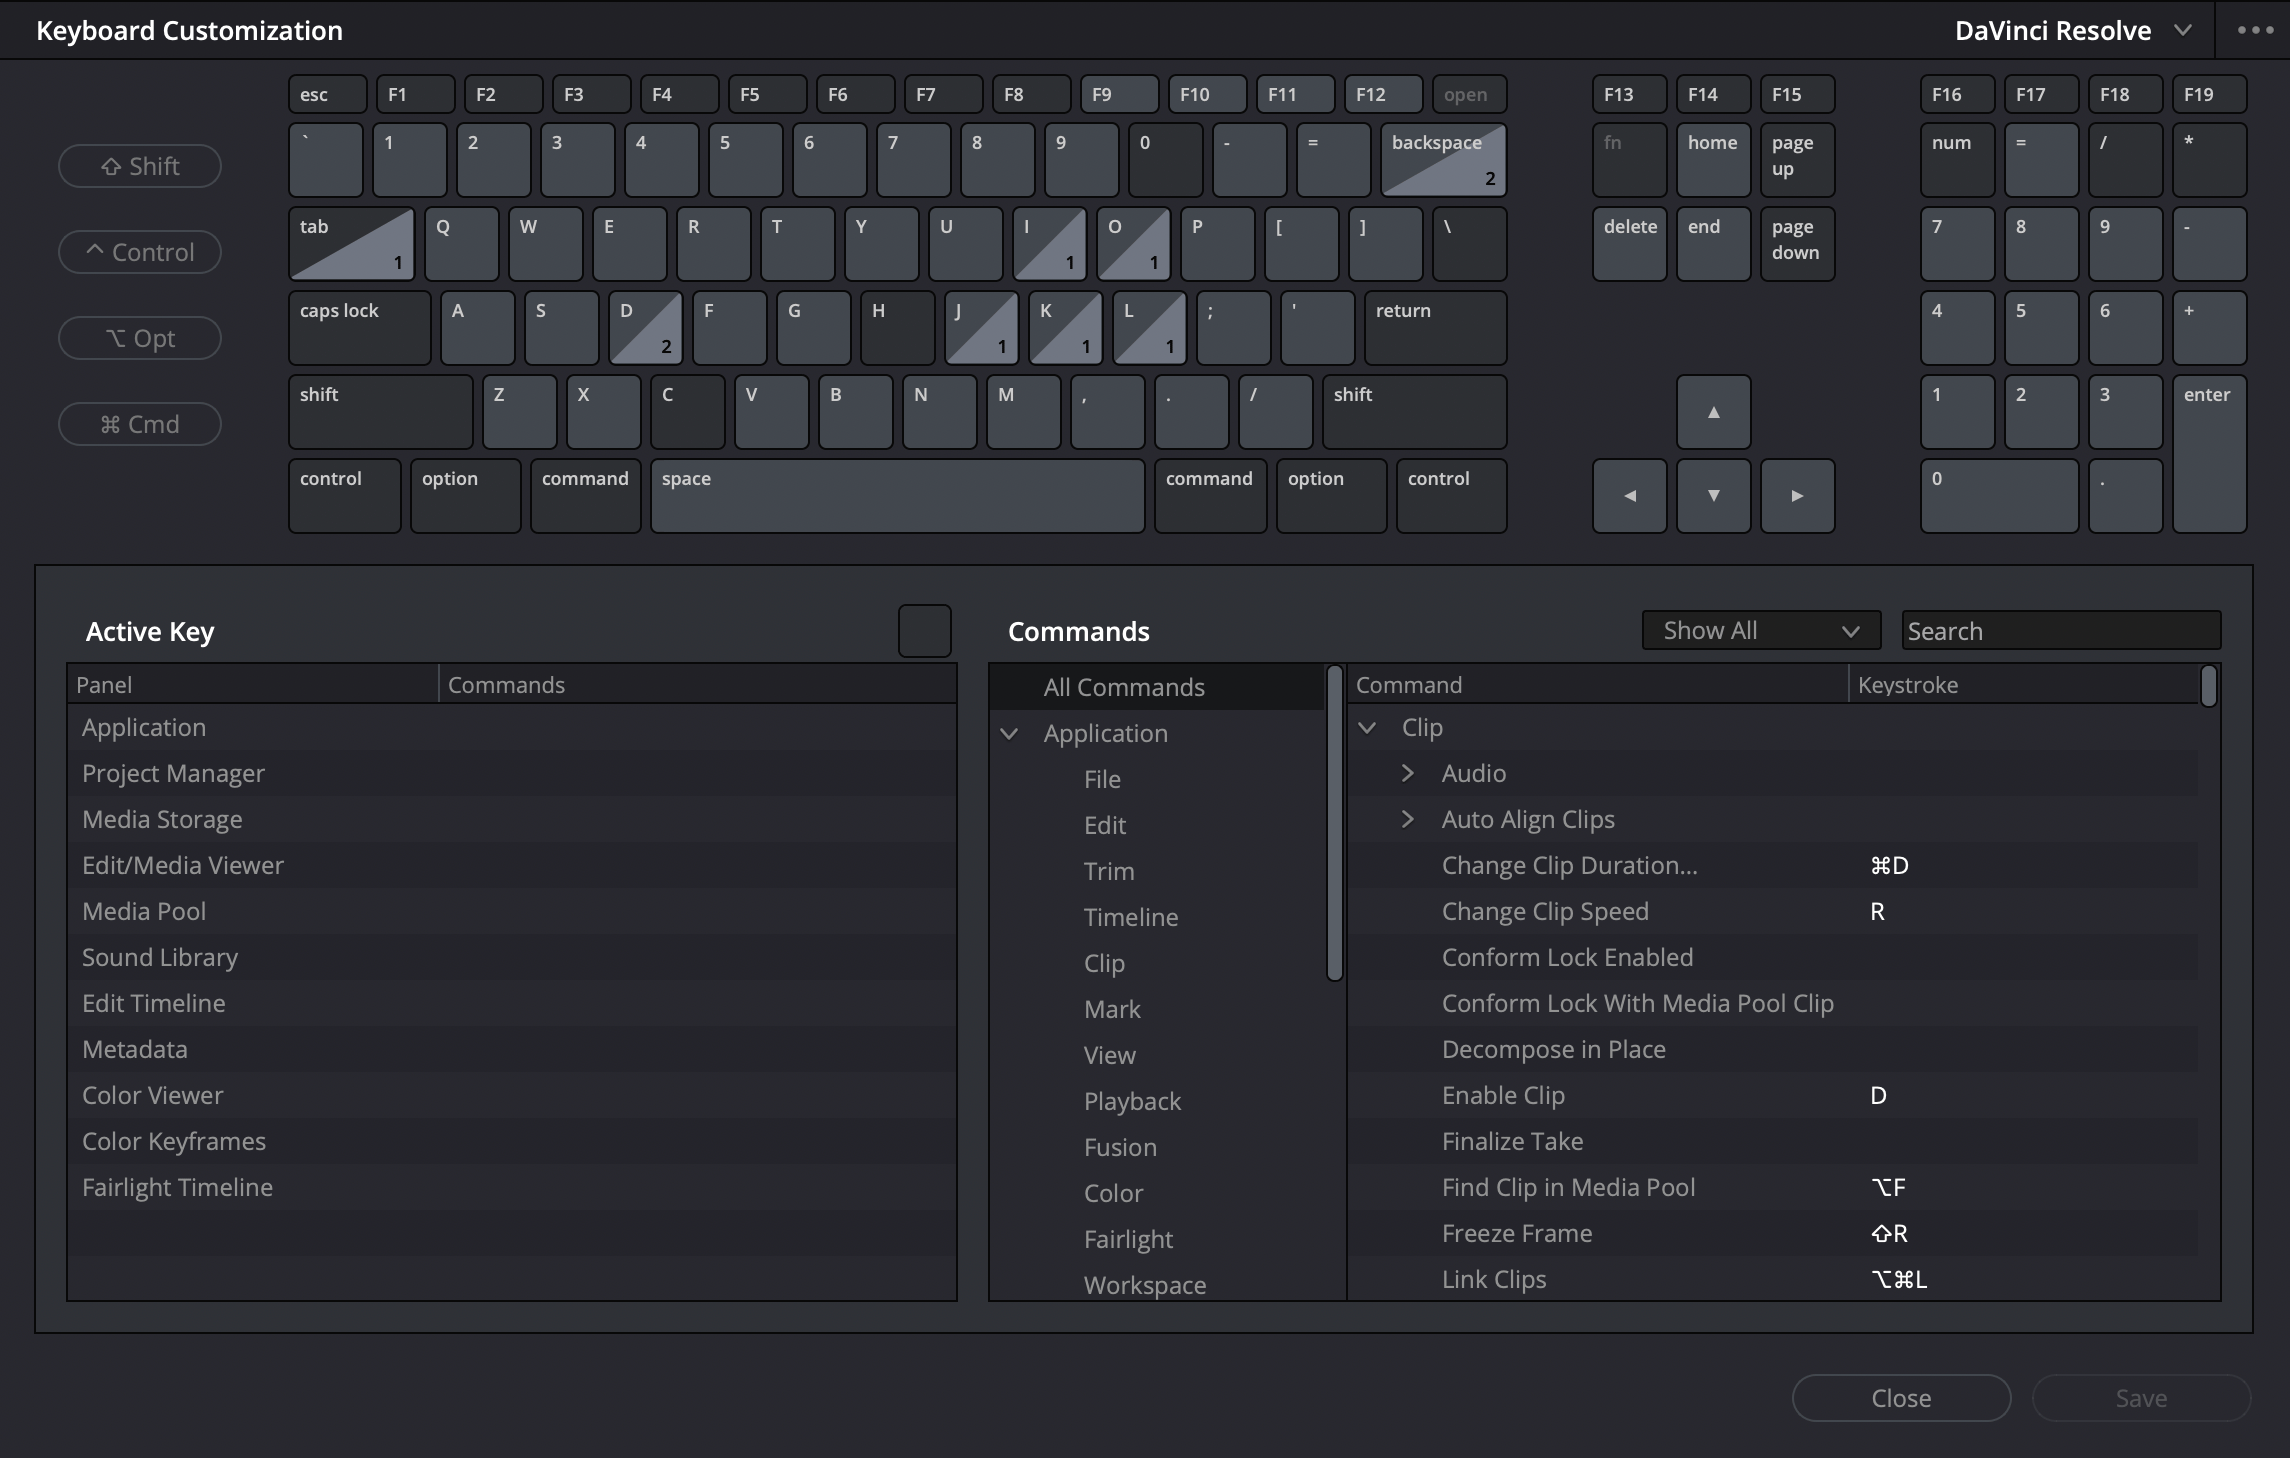 How to Change Keyboard Shortcuts in DaVinci Resolve